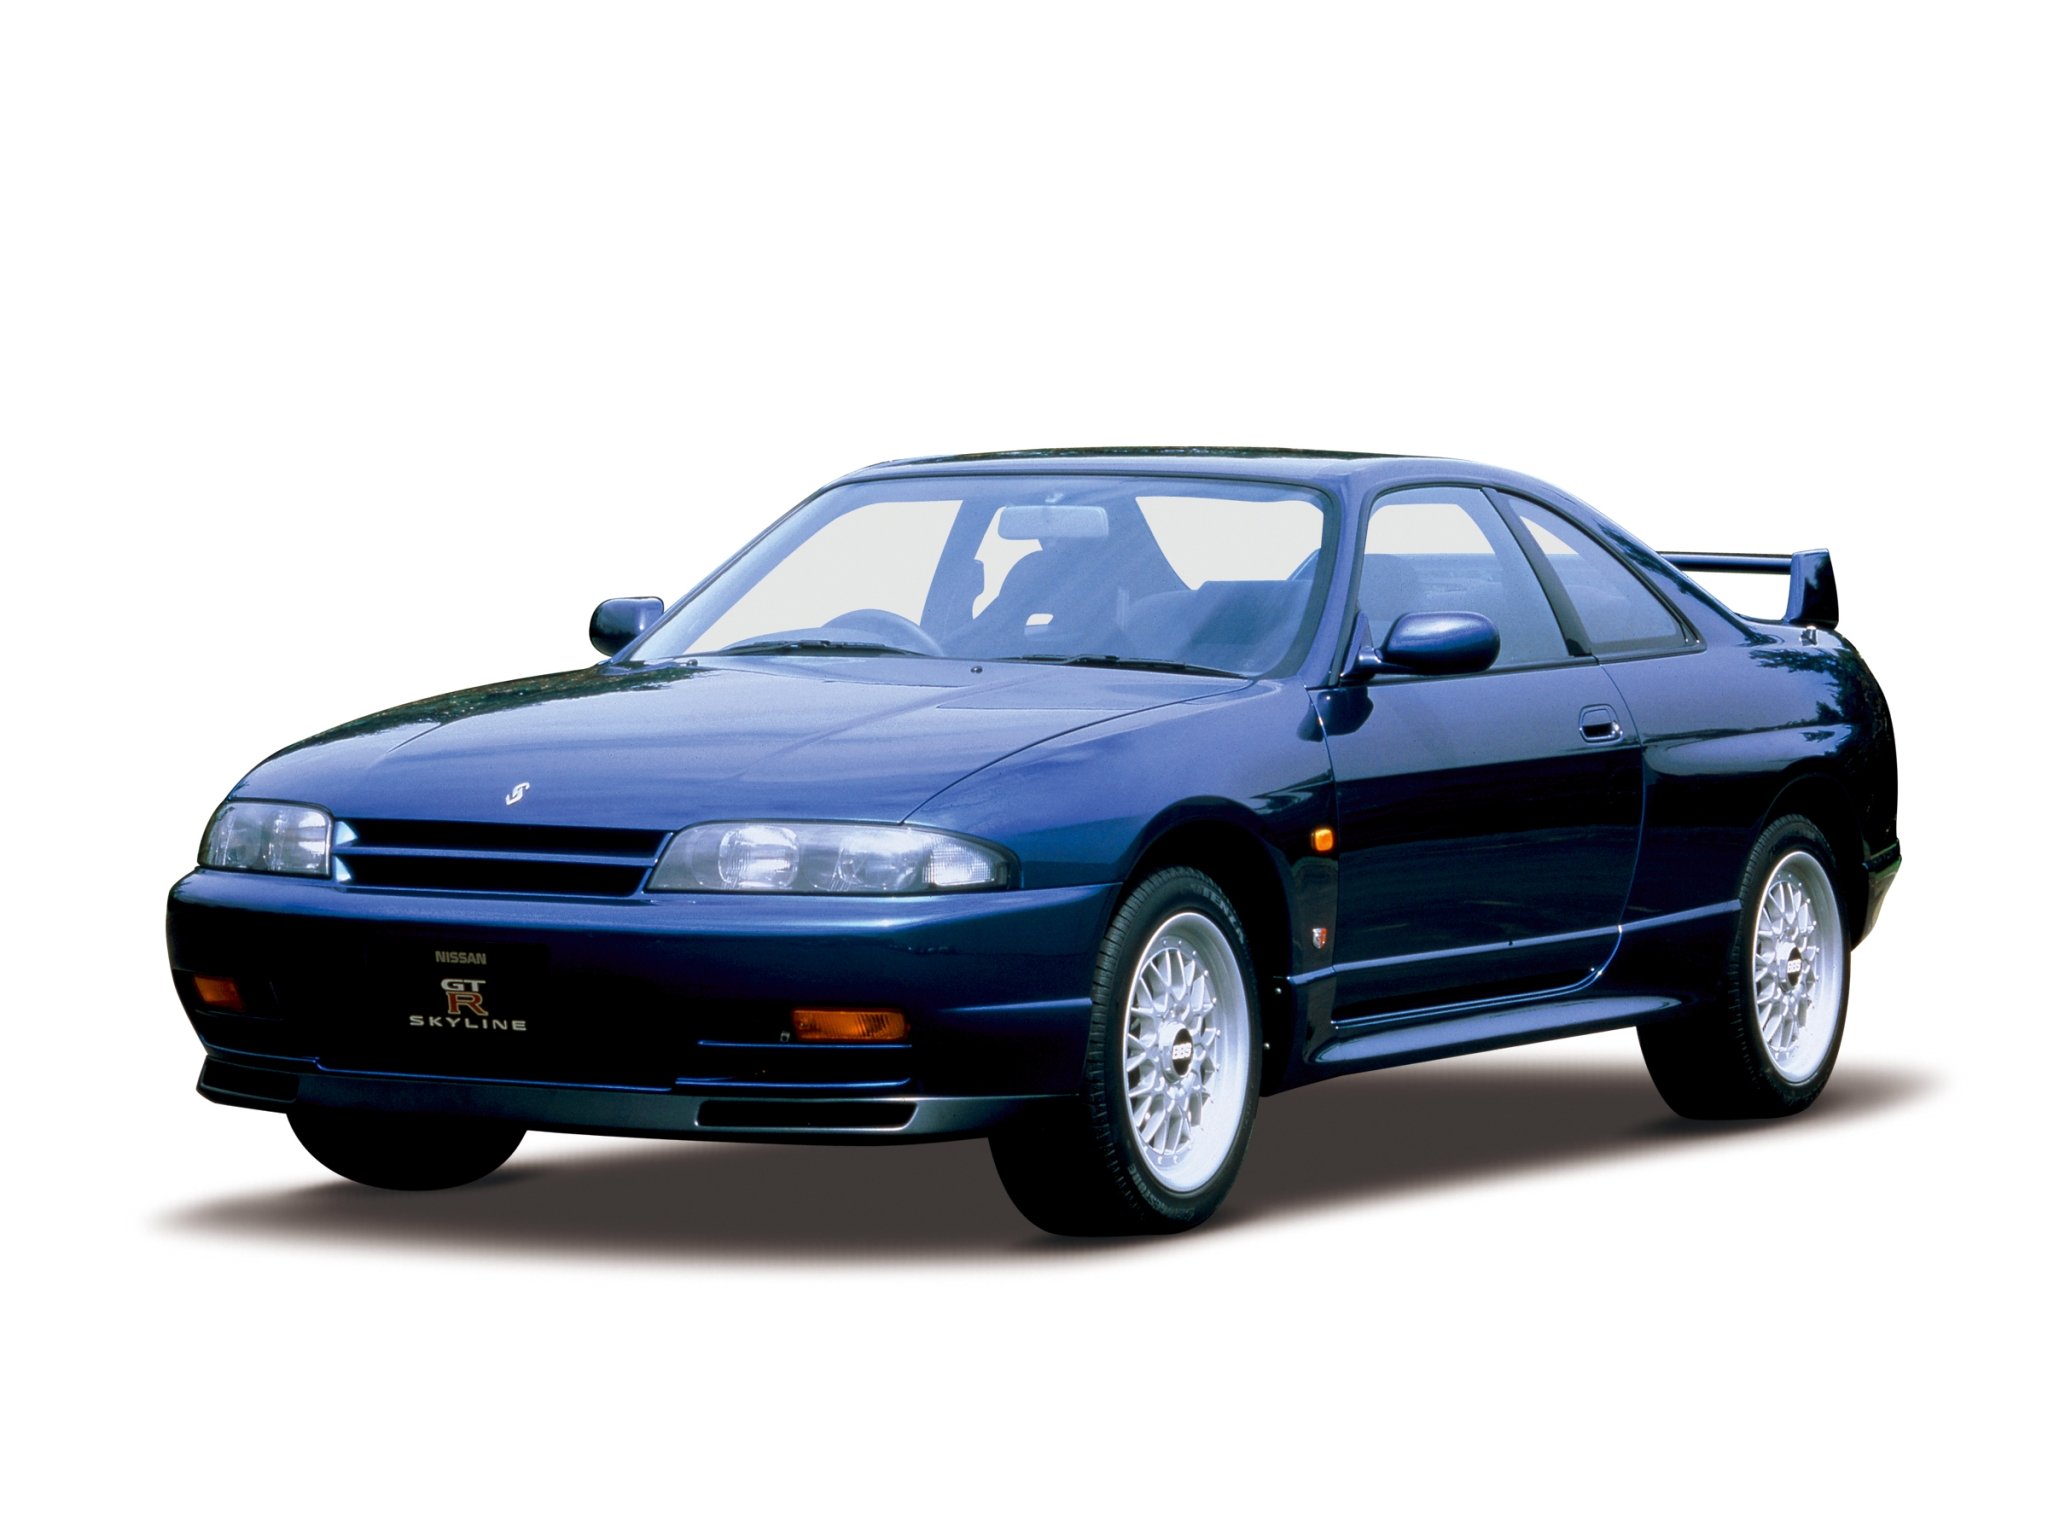 1993, Nissan, Skyline, Gt r, Prototype,  bcnr33 , Supercar, Gtr, Ew Wallpaper